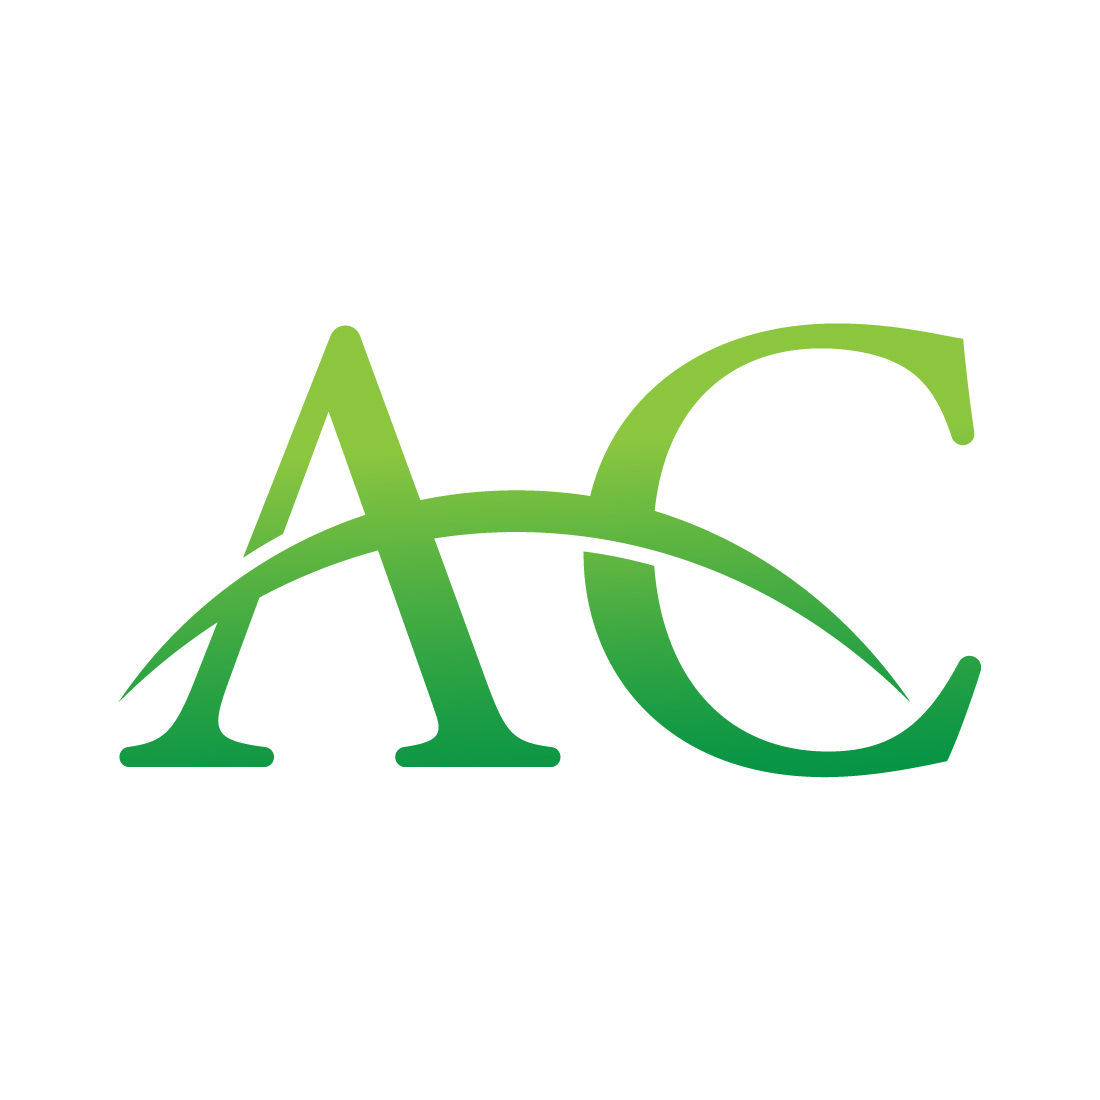 Initial AC Letter logo design, Vector design concept preview image.